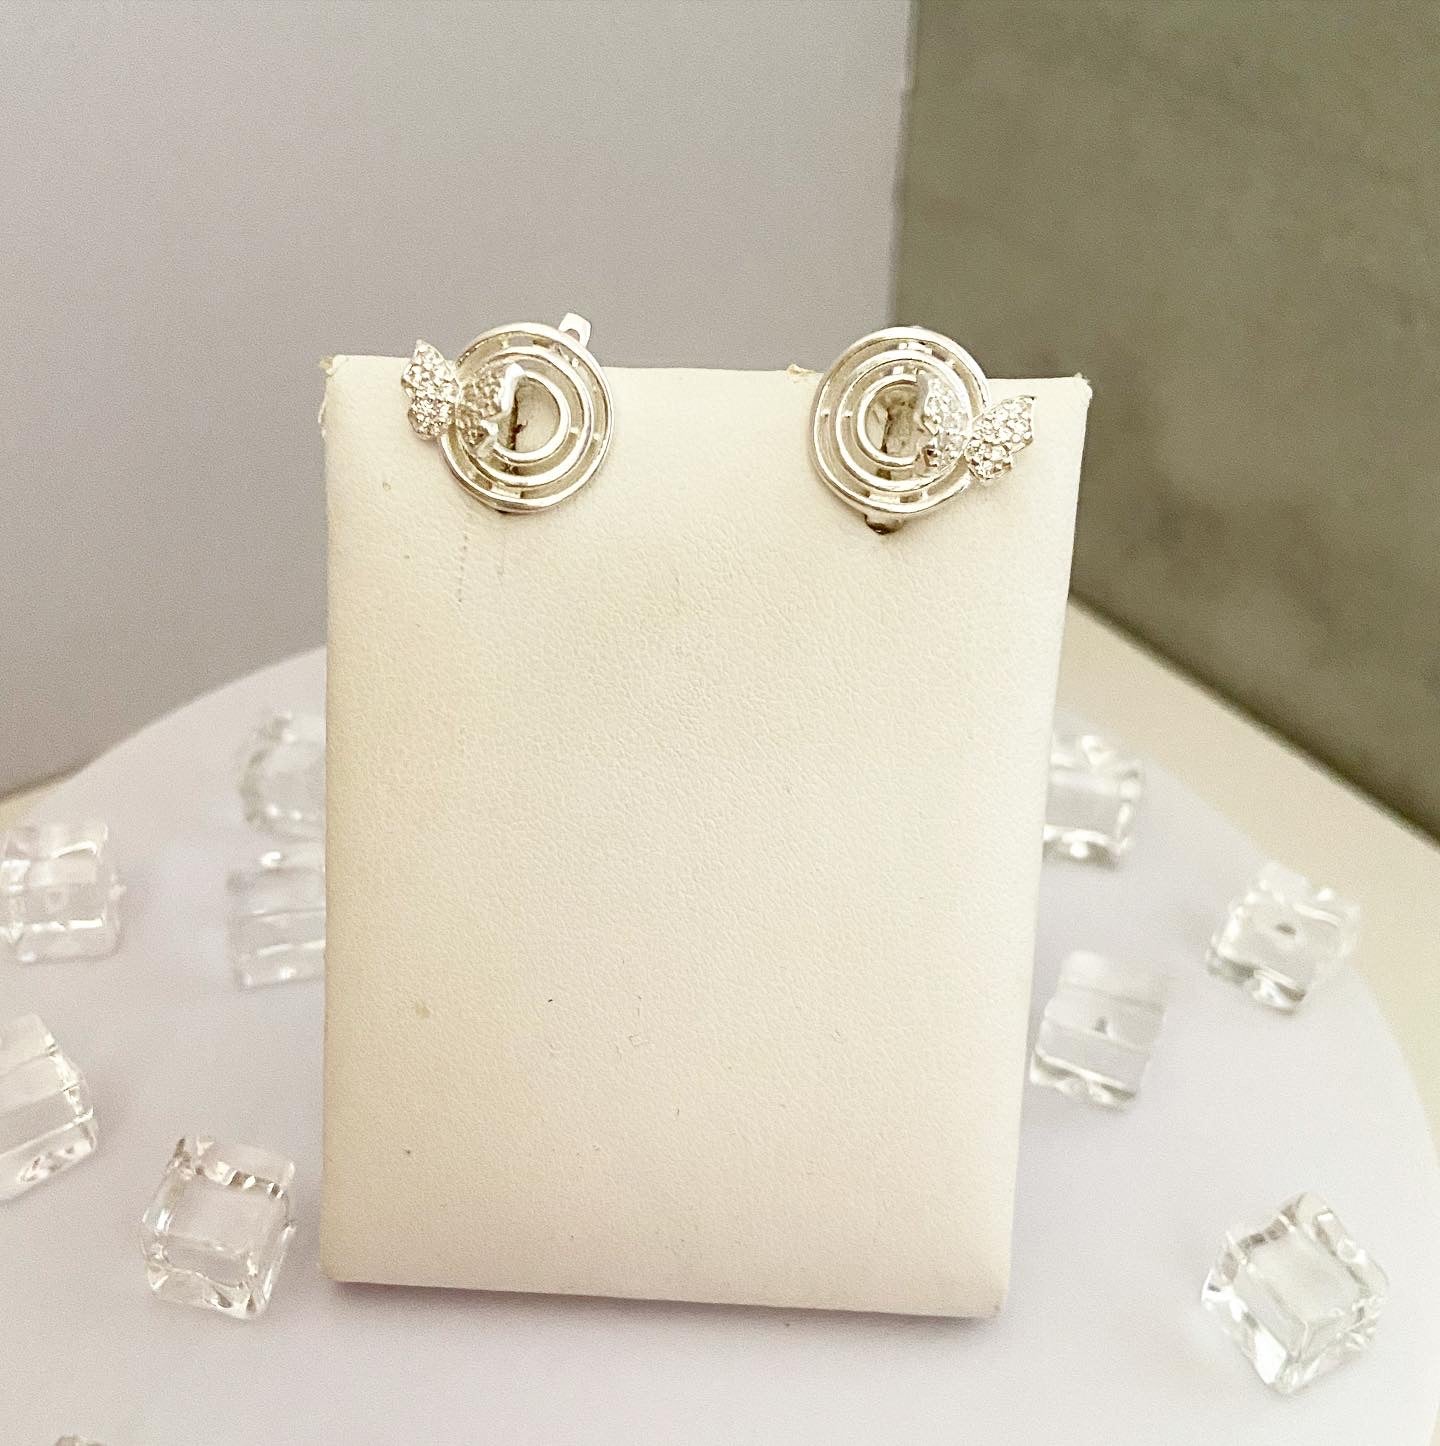 Silver earrings with butterfly